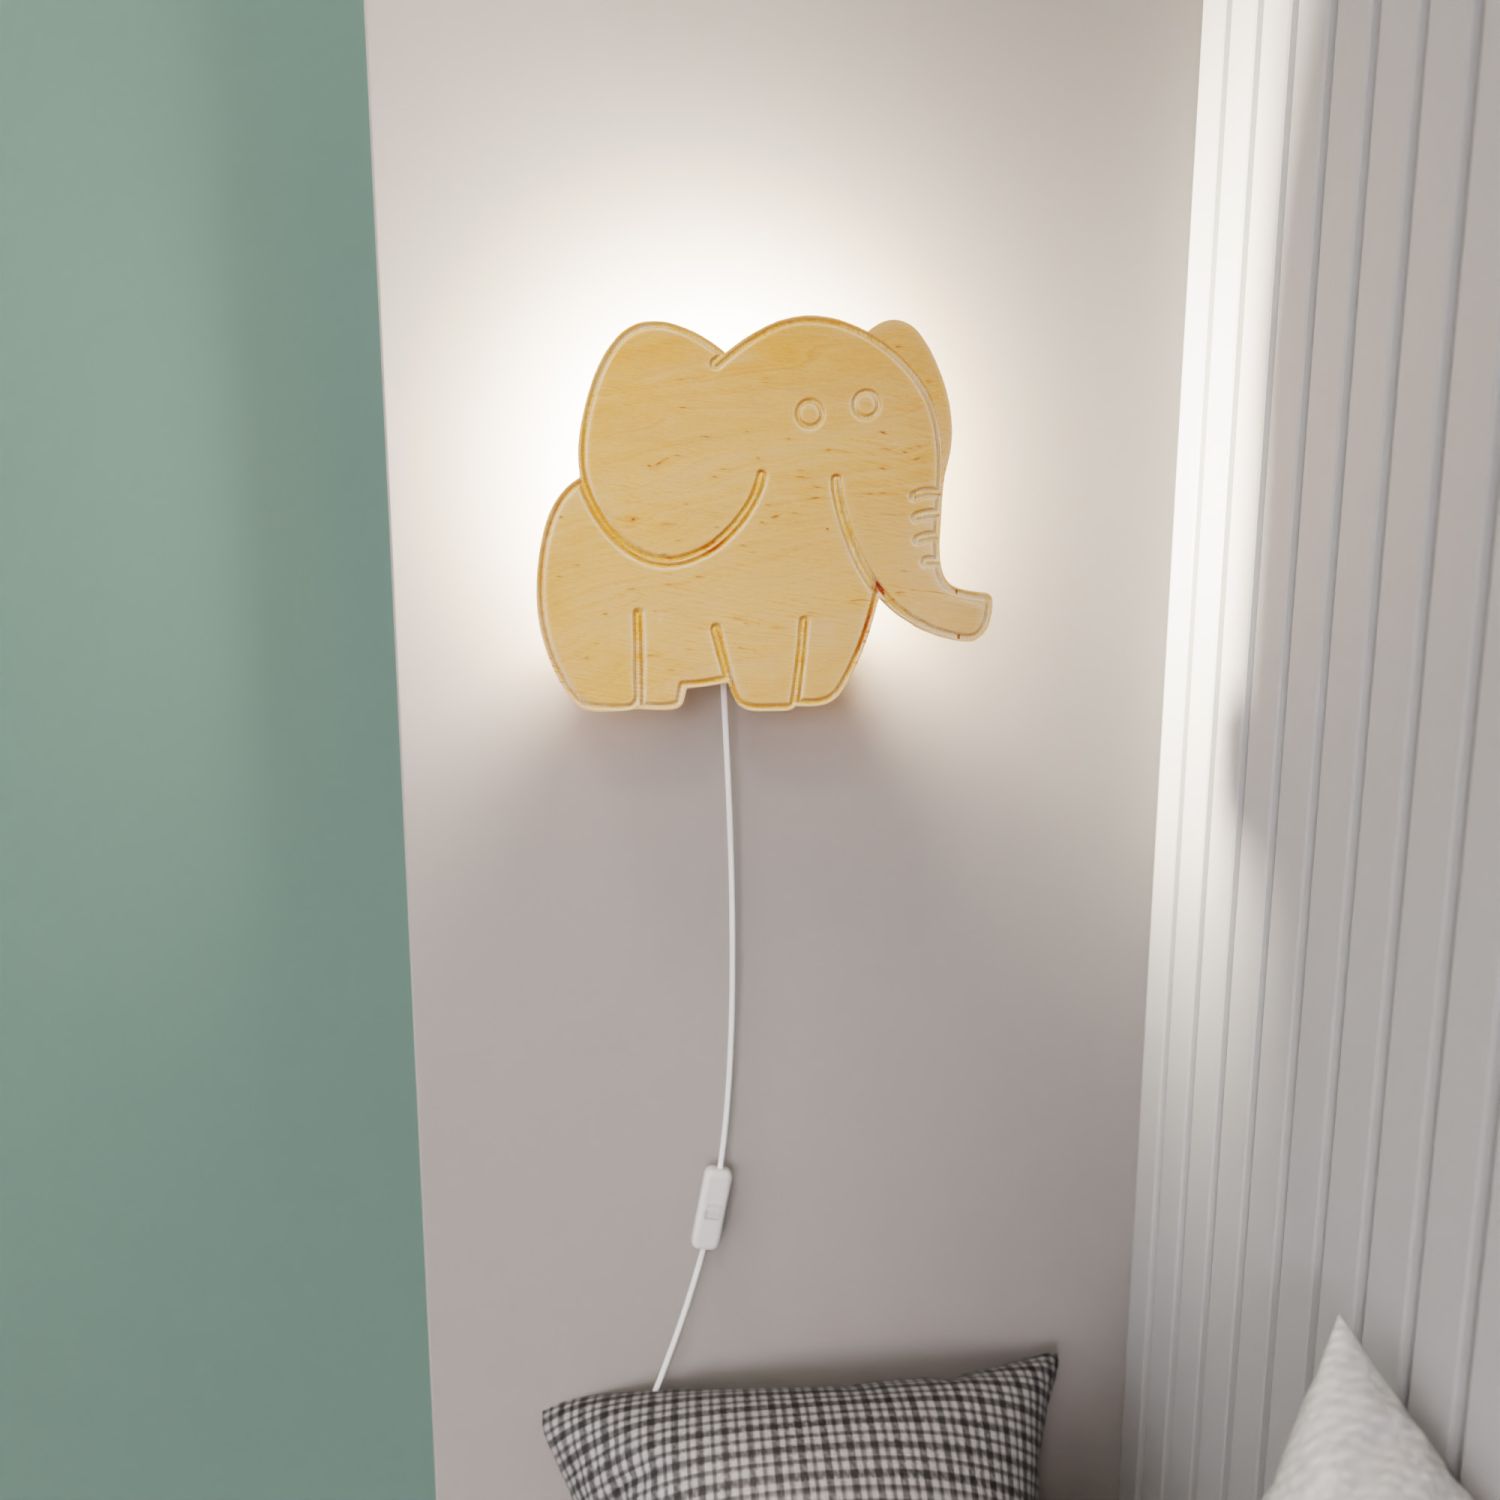 Wandlampe Kinderzimmer Holz mit Stecker Schalter Elefant E14